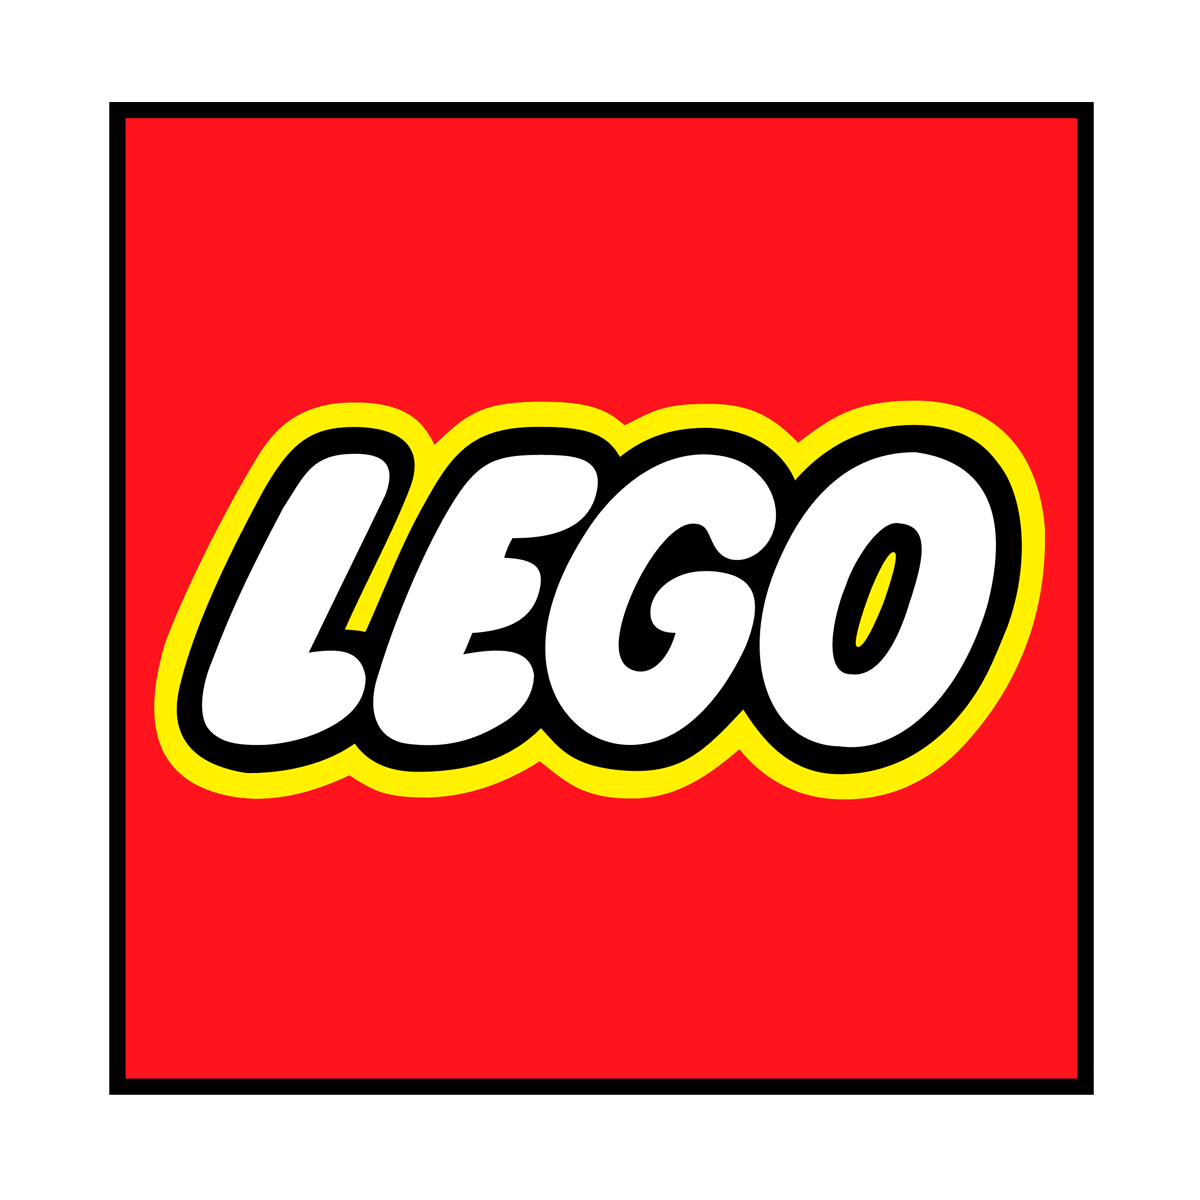 LEGO Logo 1972-1998